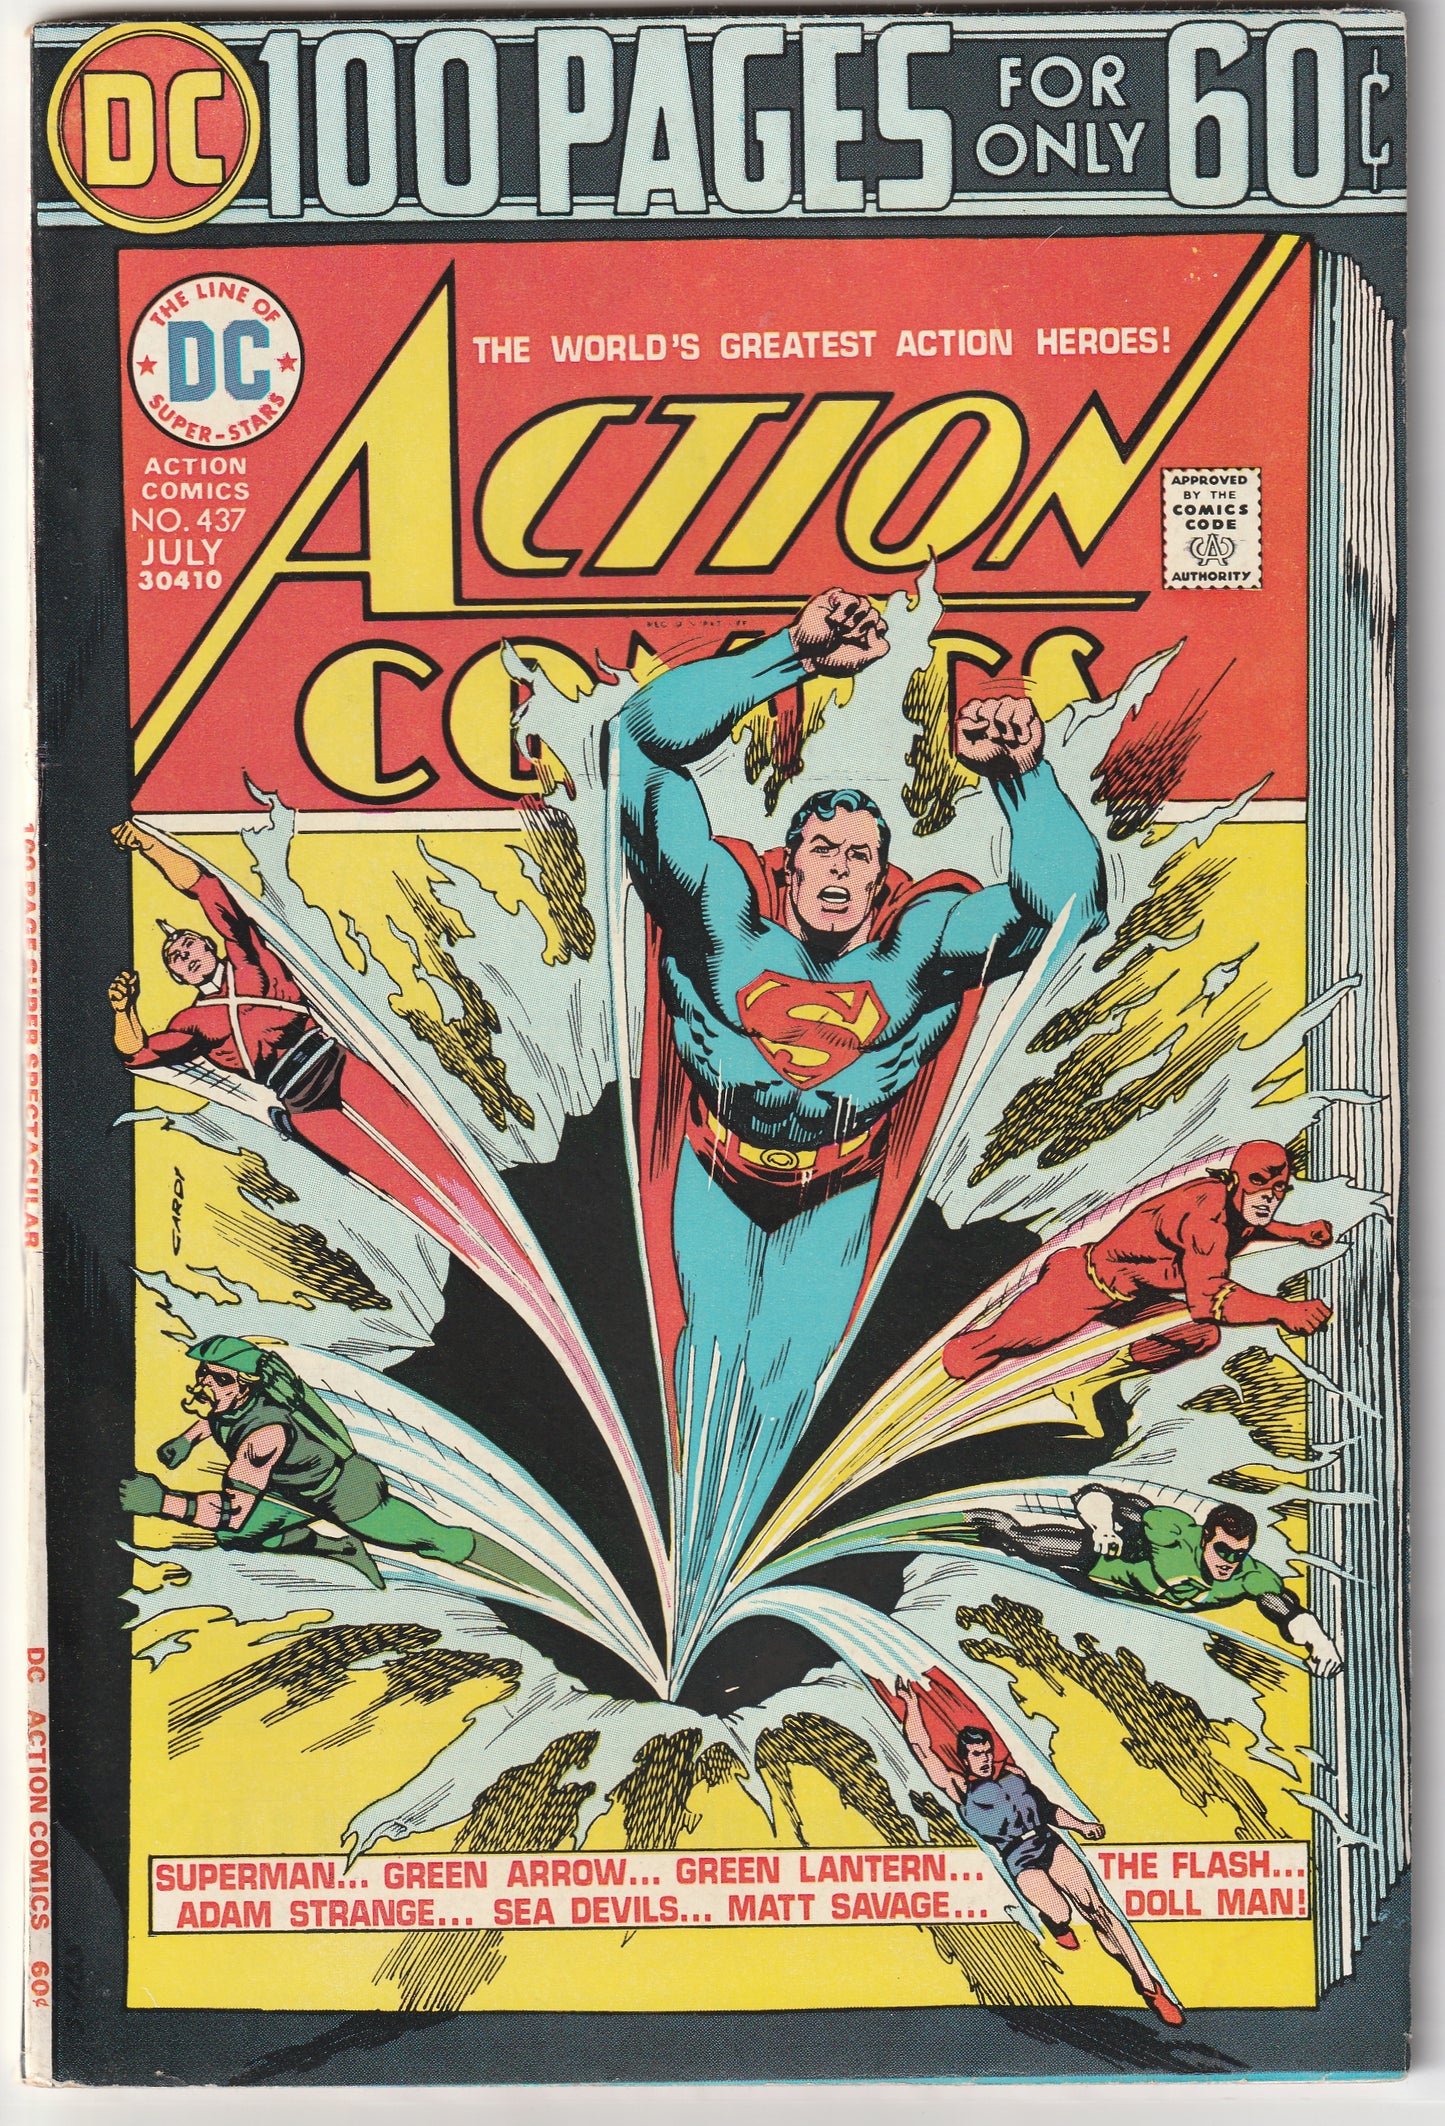 Action Comics #437 (1974) - 100 Pages